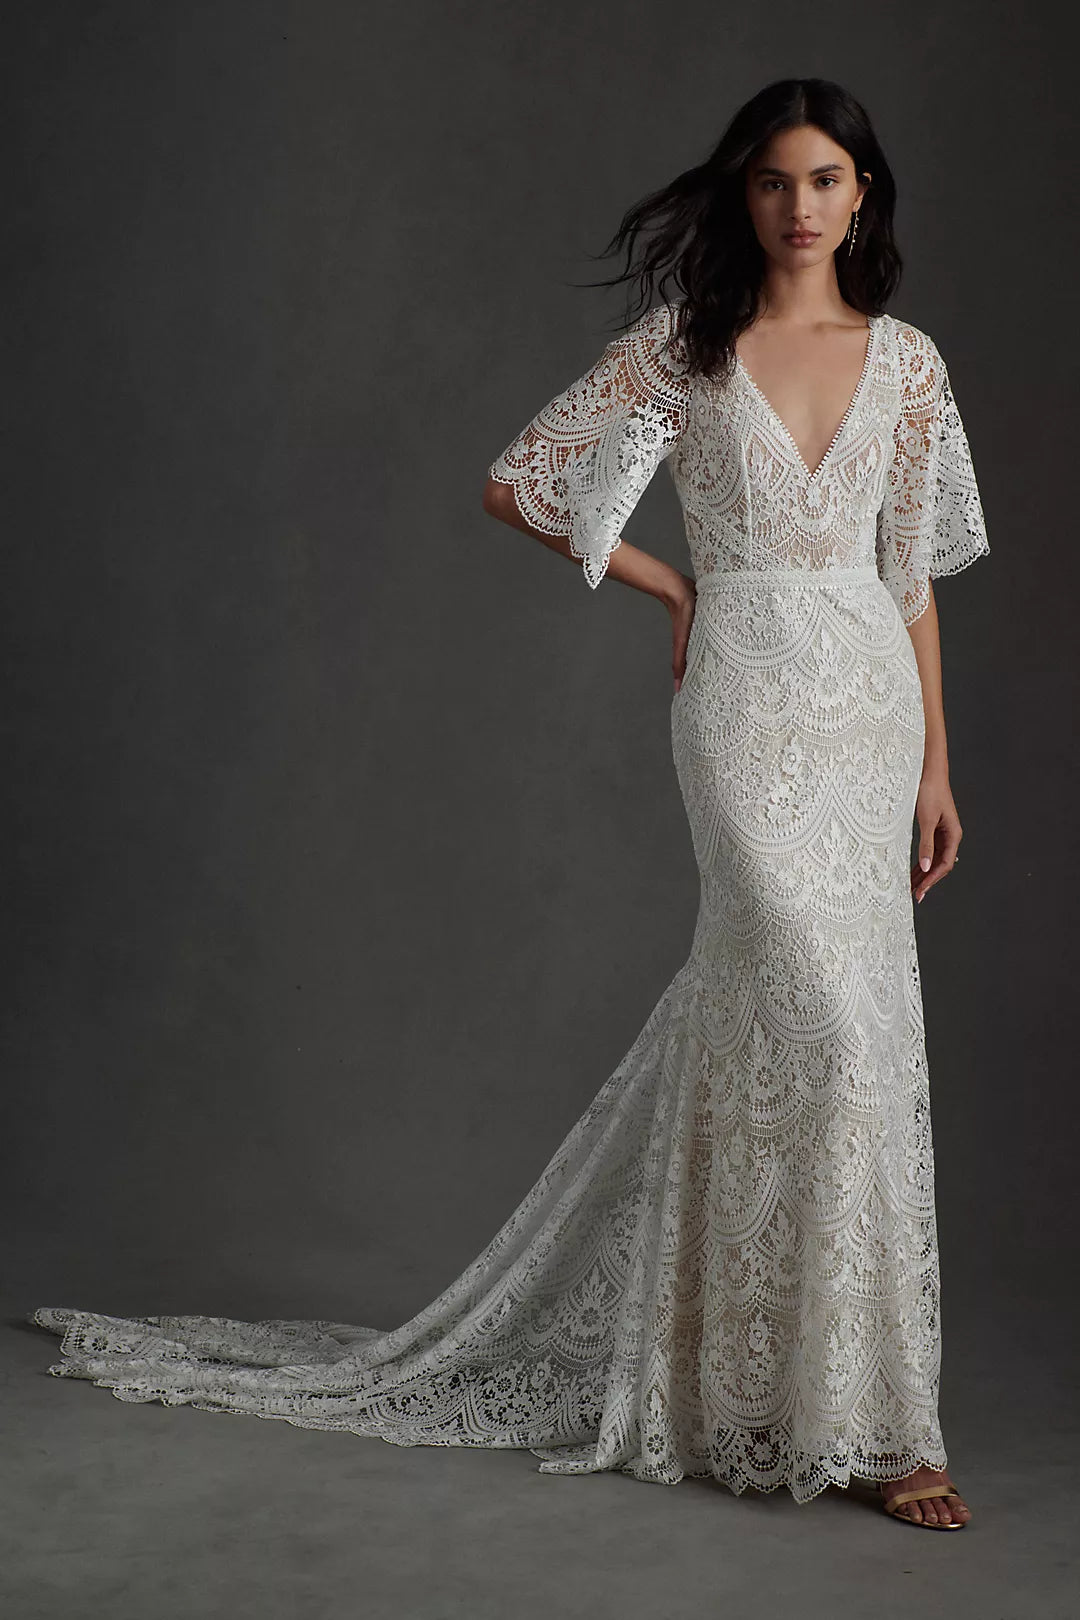 Rish Haleh Flutter-Sleeve Allover Lace V-Neck Fit & Flare Wedding Gown - 6